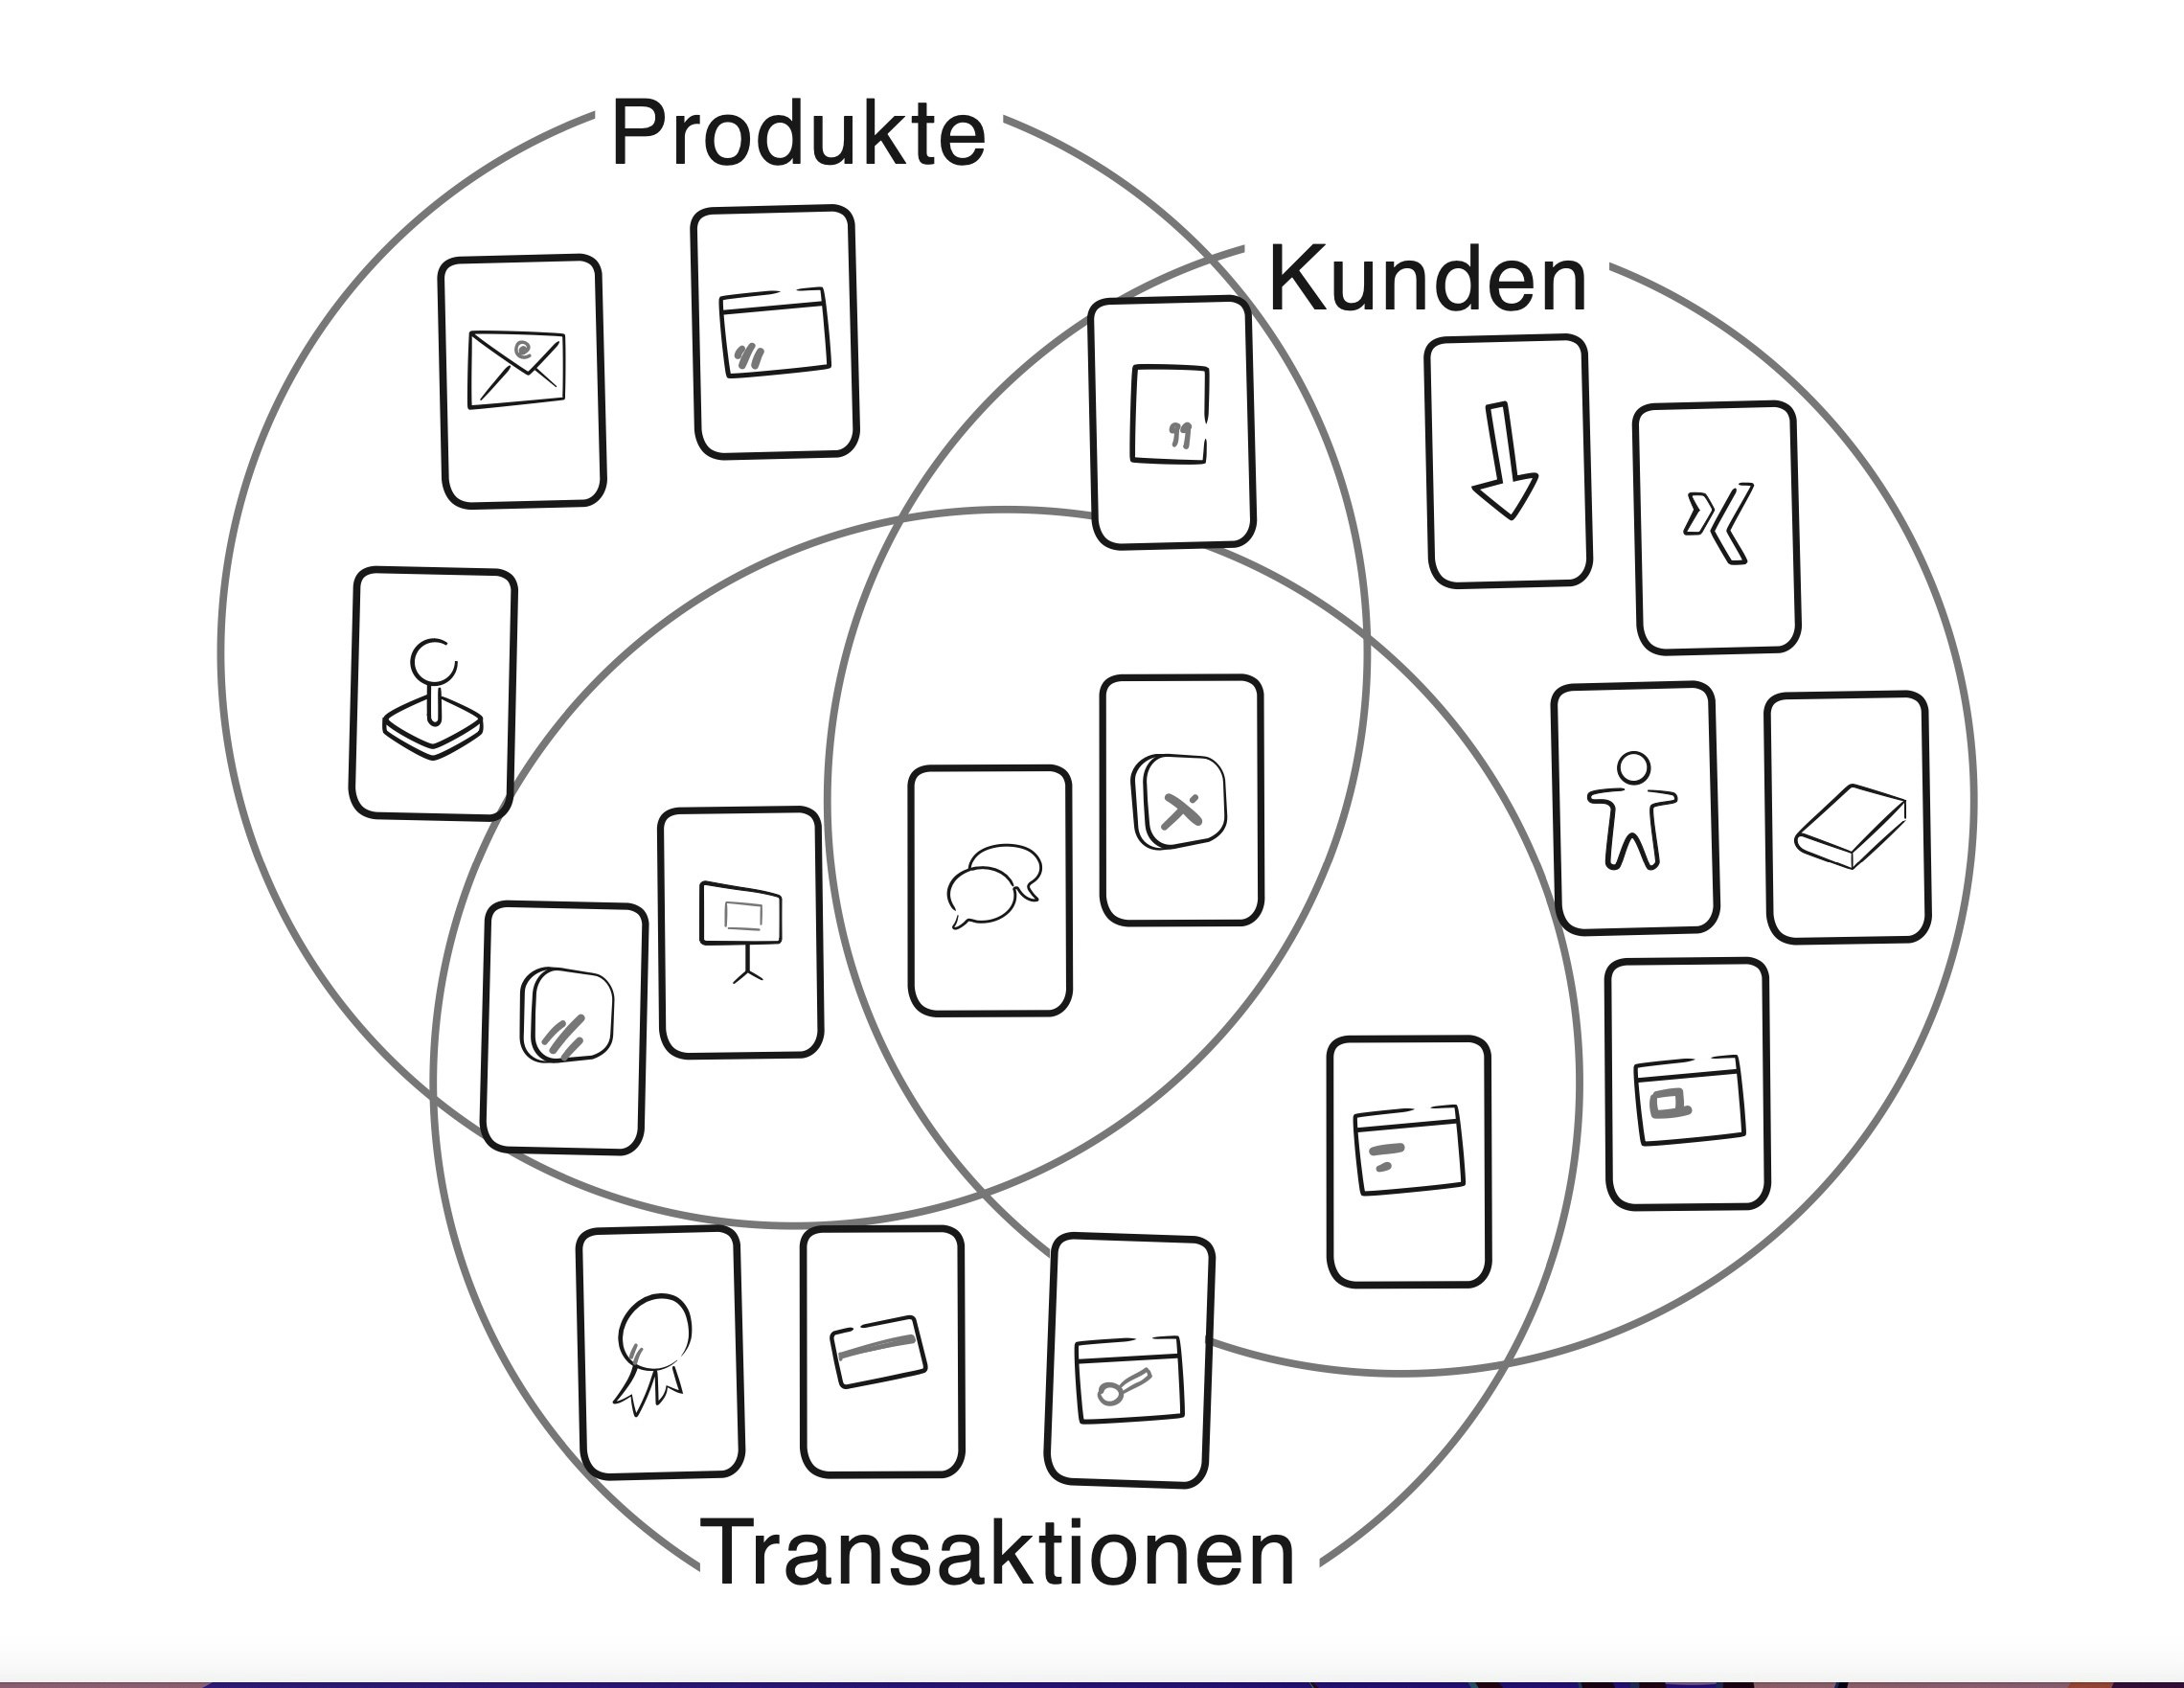 Three circles: products, customers, transactions